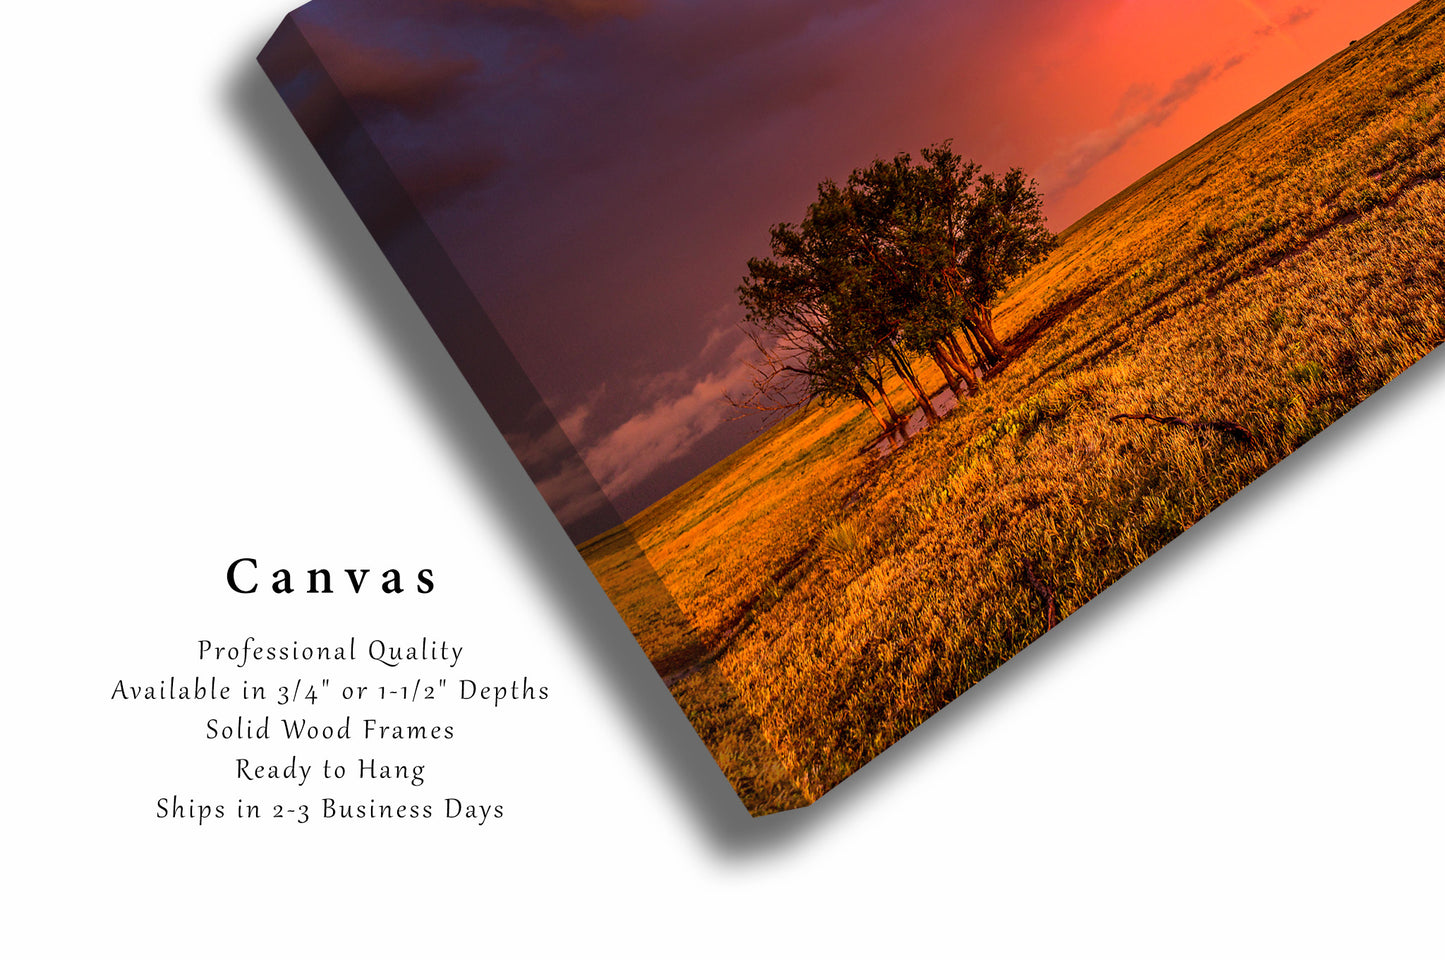 Great Plains Canvas Print | Rainbow over Trees on Prairie Wall Art | Oklahoma Panhandle Photography | Stormy Sky Photo | Western Decor